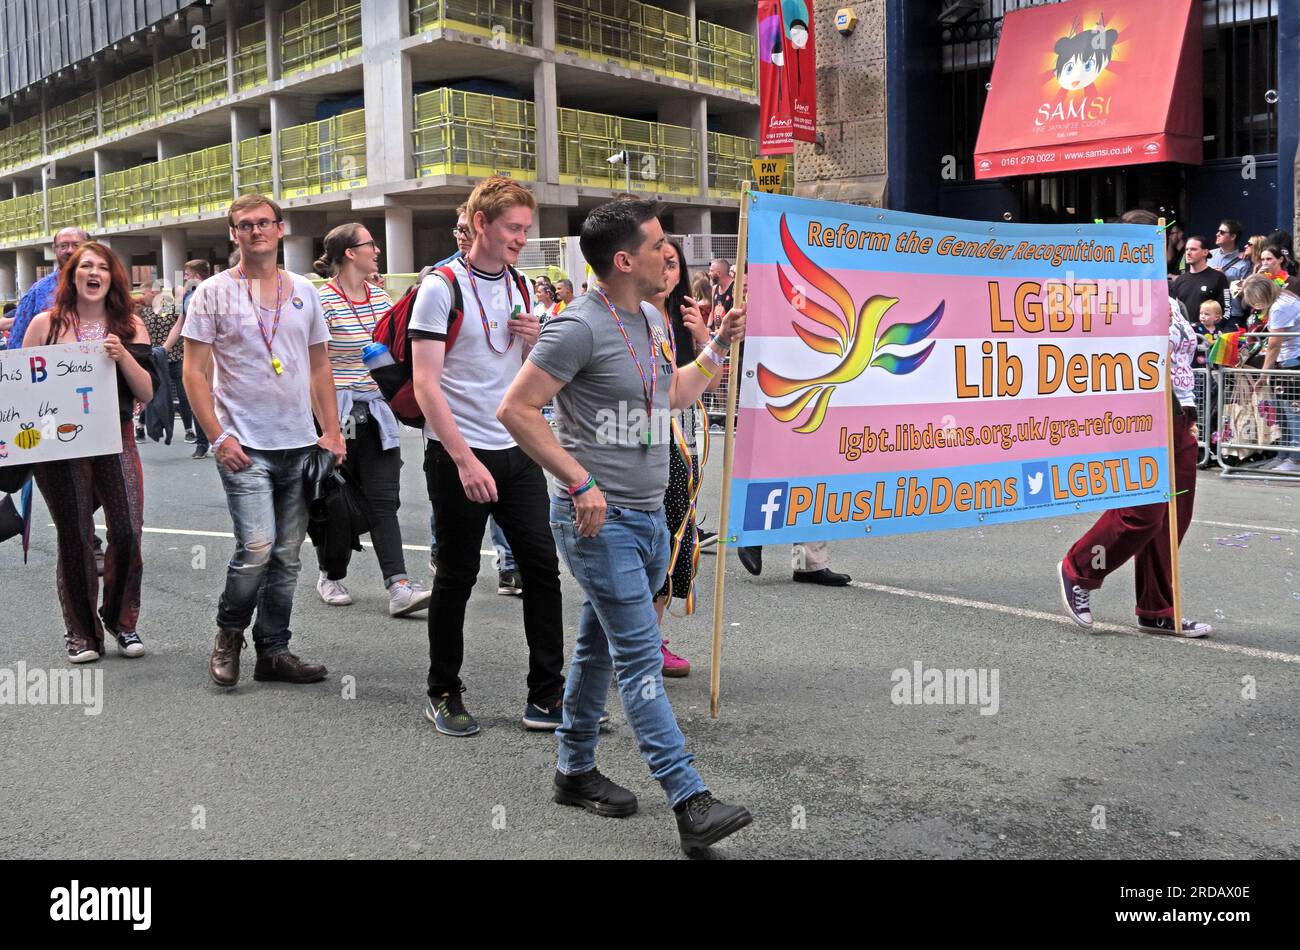 LGBT+ Lib Dems at Manchester Pride Festival Parade, 36 Whitworth Street, Manchester, England, UK, M1 3NR Stockfoto